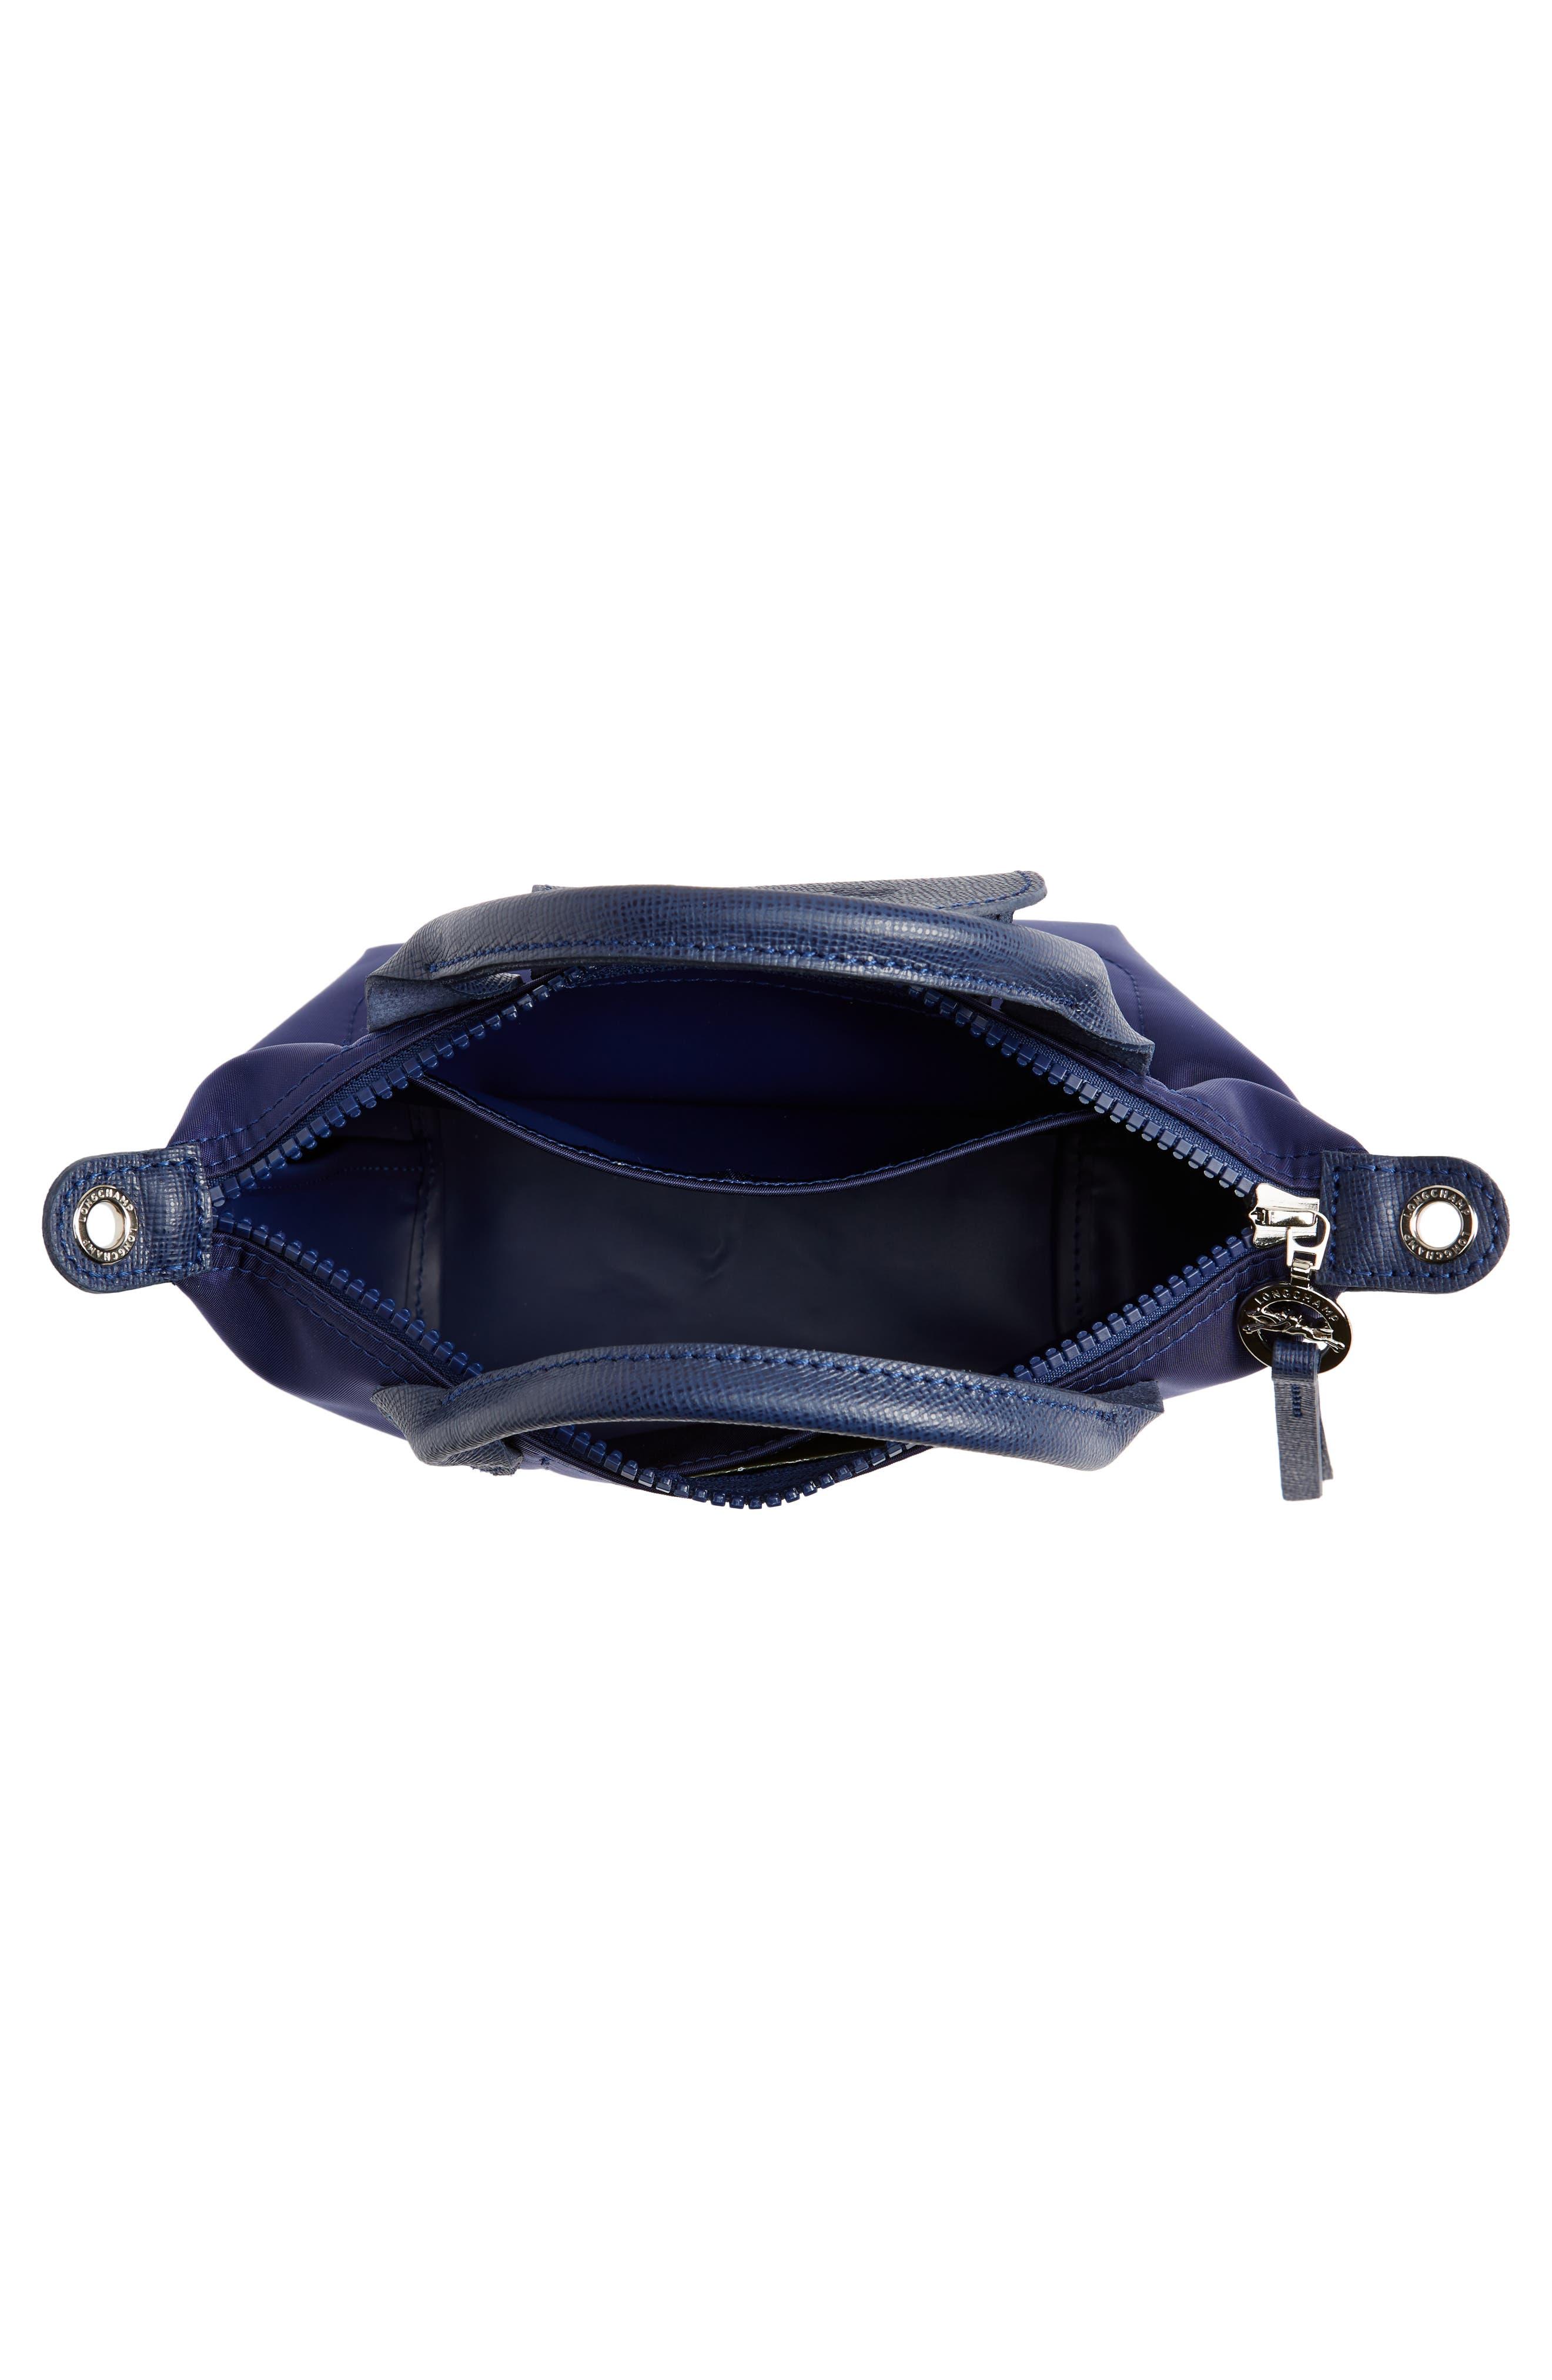 LONGCHAMP Navy Blue Mini Crossbody/Belt Bag - The Purse Ladies